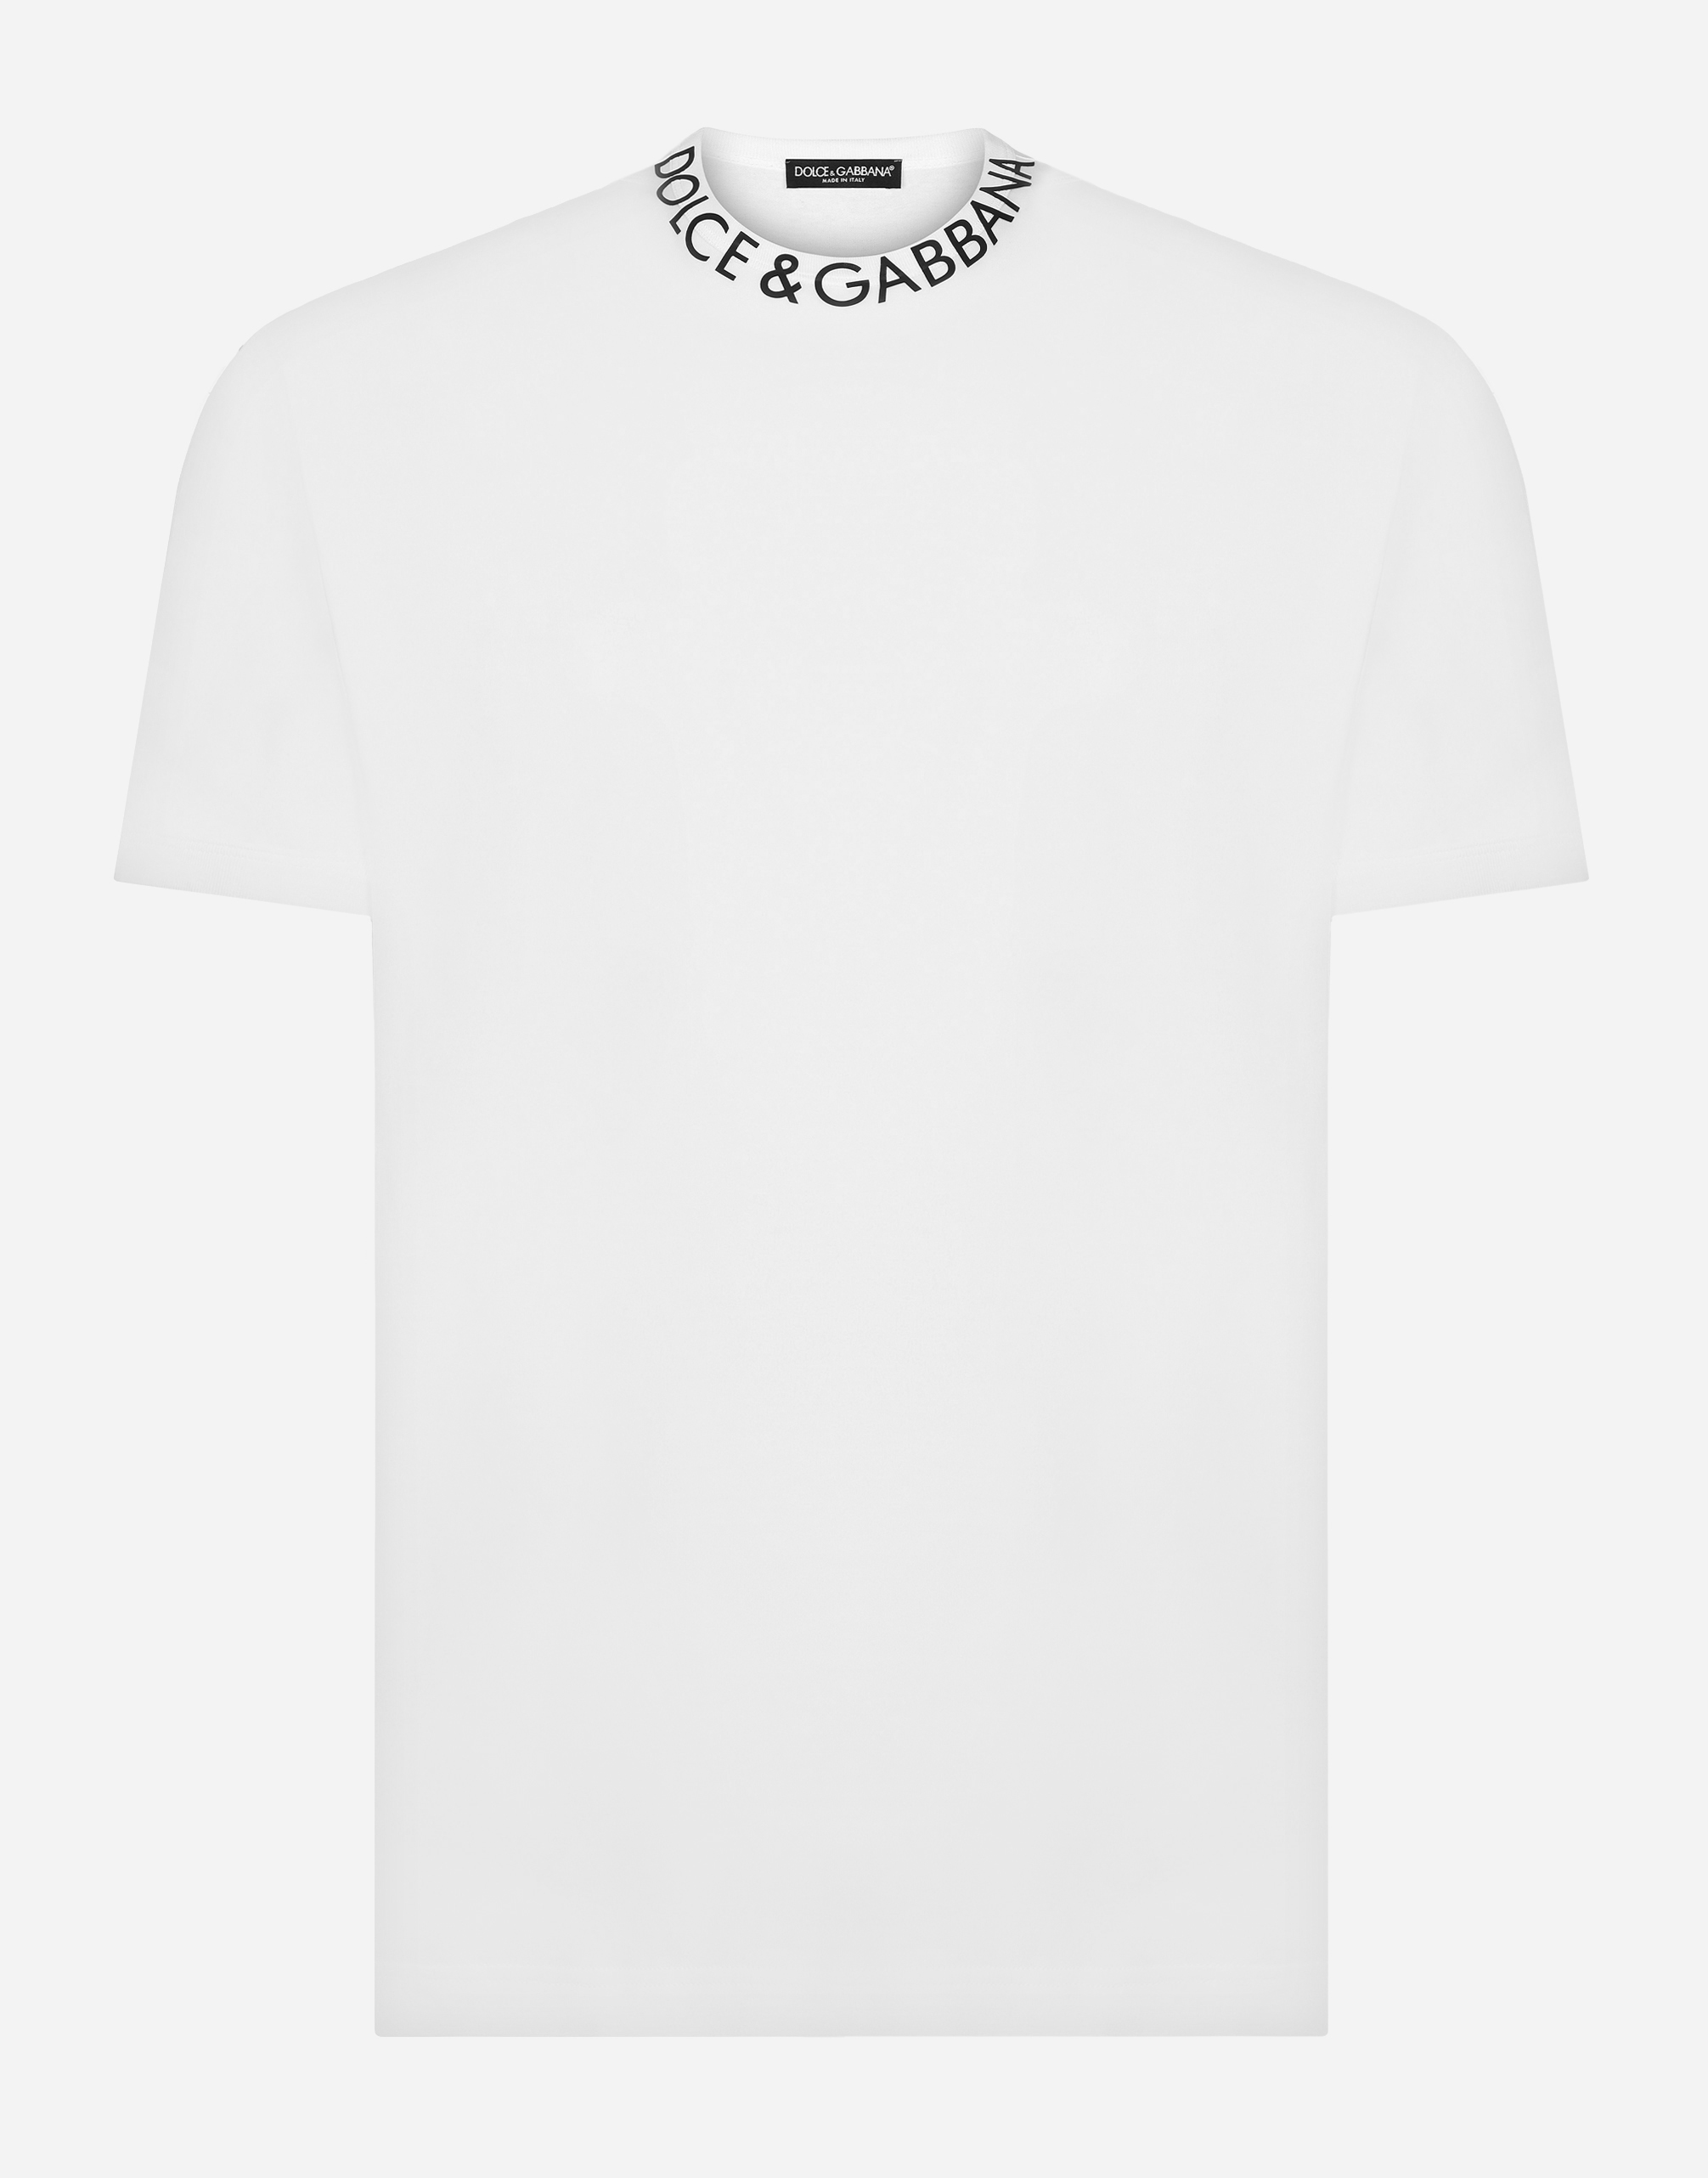 Dolce & Gabbana Round-neck T-shirt With Dolce&gabbana Print In White